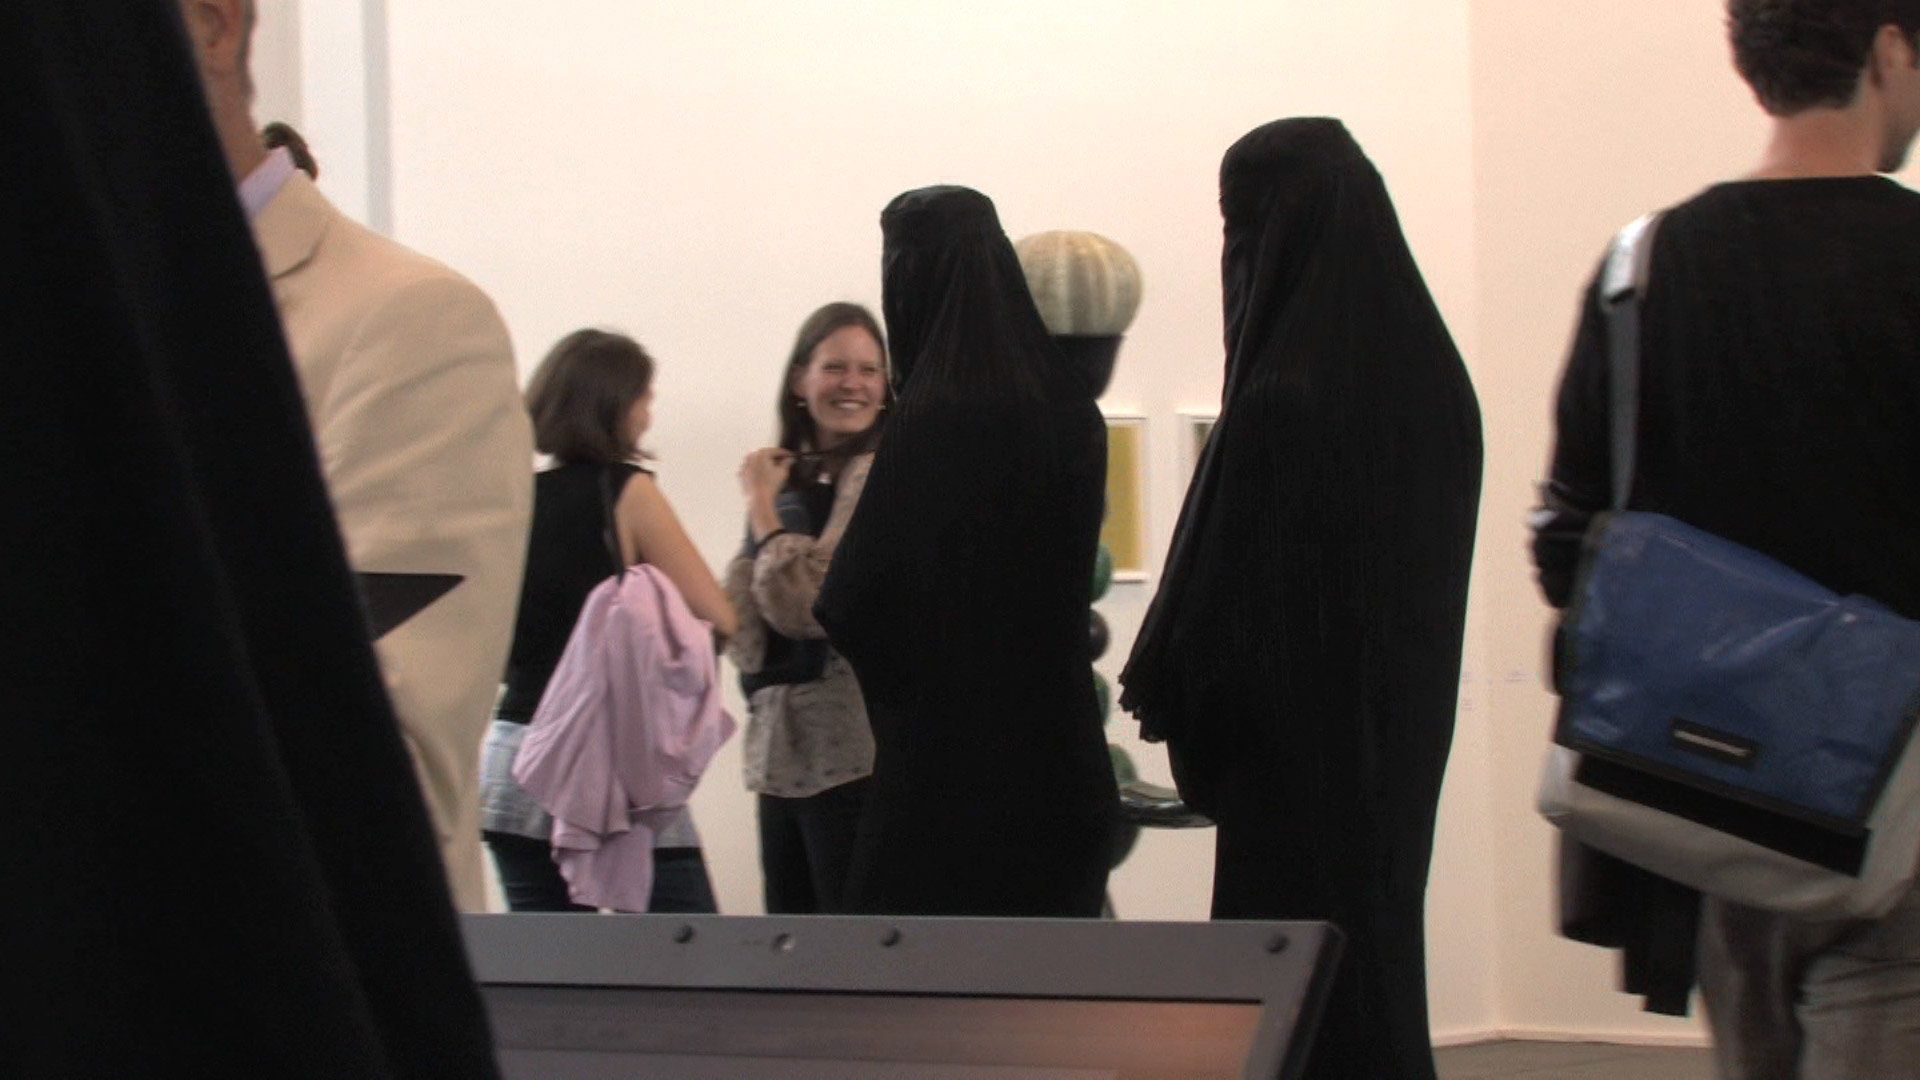 Sebastian Bieniek performance in a burqa at the Art Forum Berlin 2009 art fair.